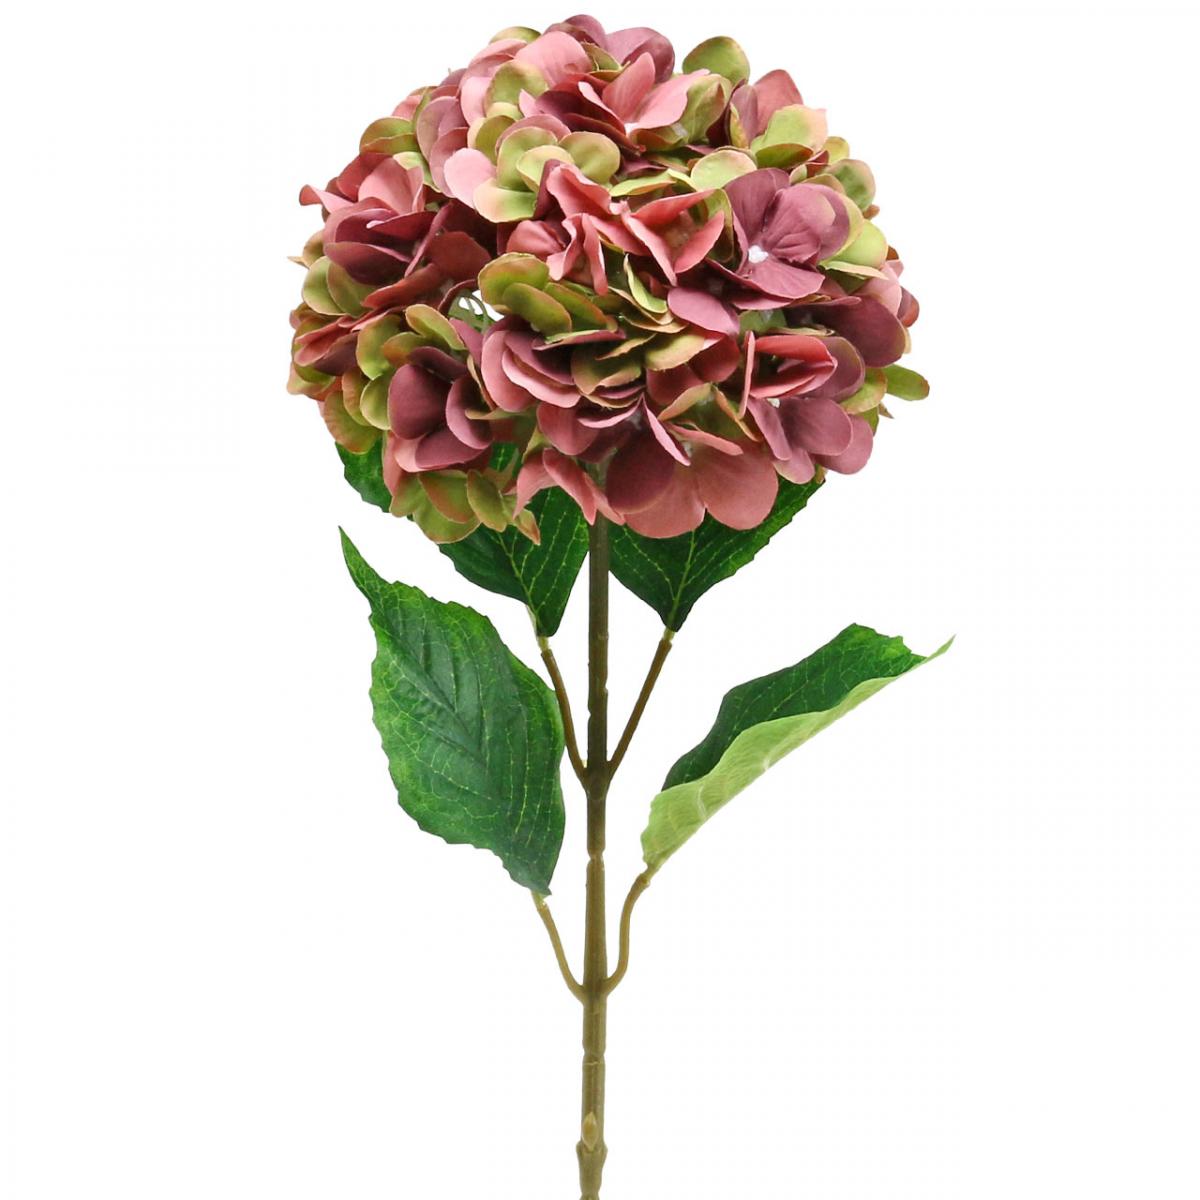 Bordeaux Floristik24.de groß künstlich Kunstblume Hortensie Rosa, 80cm-69802